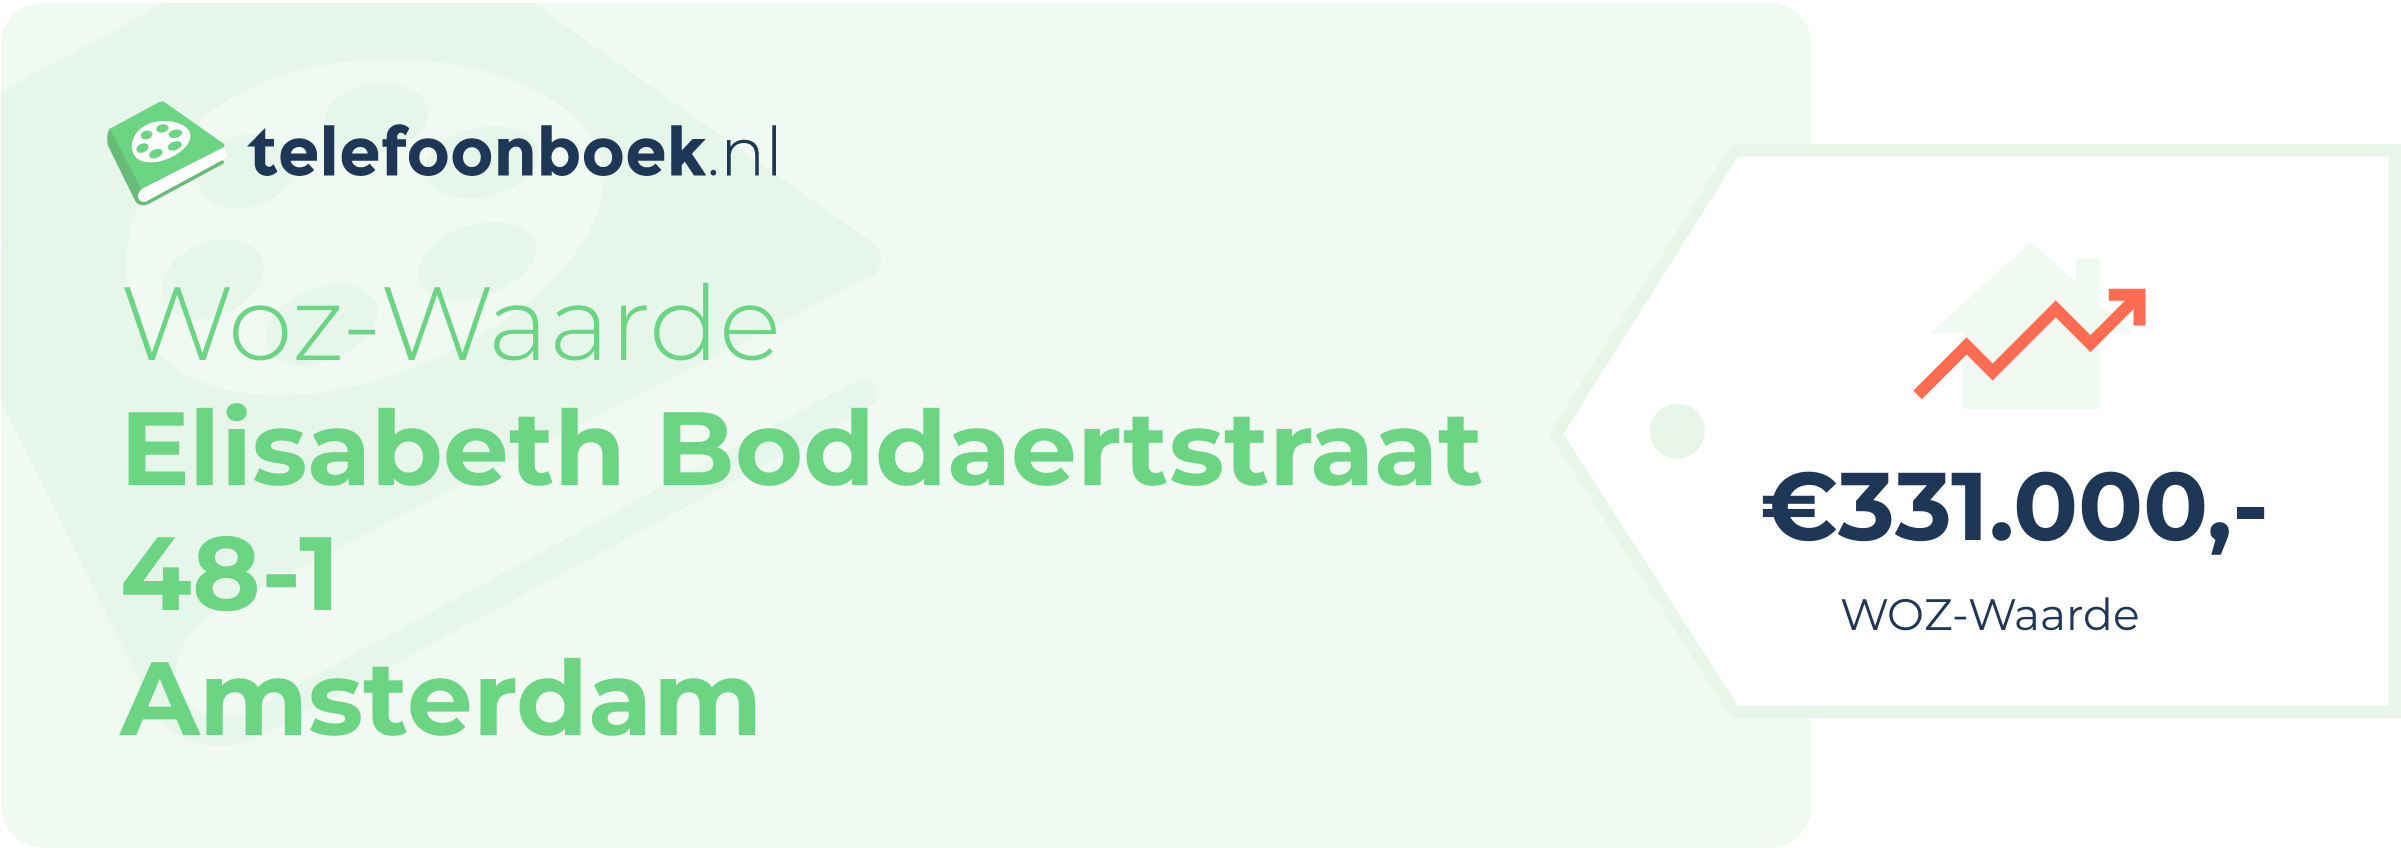 WOZ-waarde Elisabeth Boddaertstraat 48-1 Amsterdam